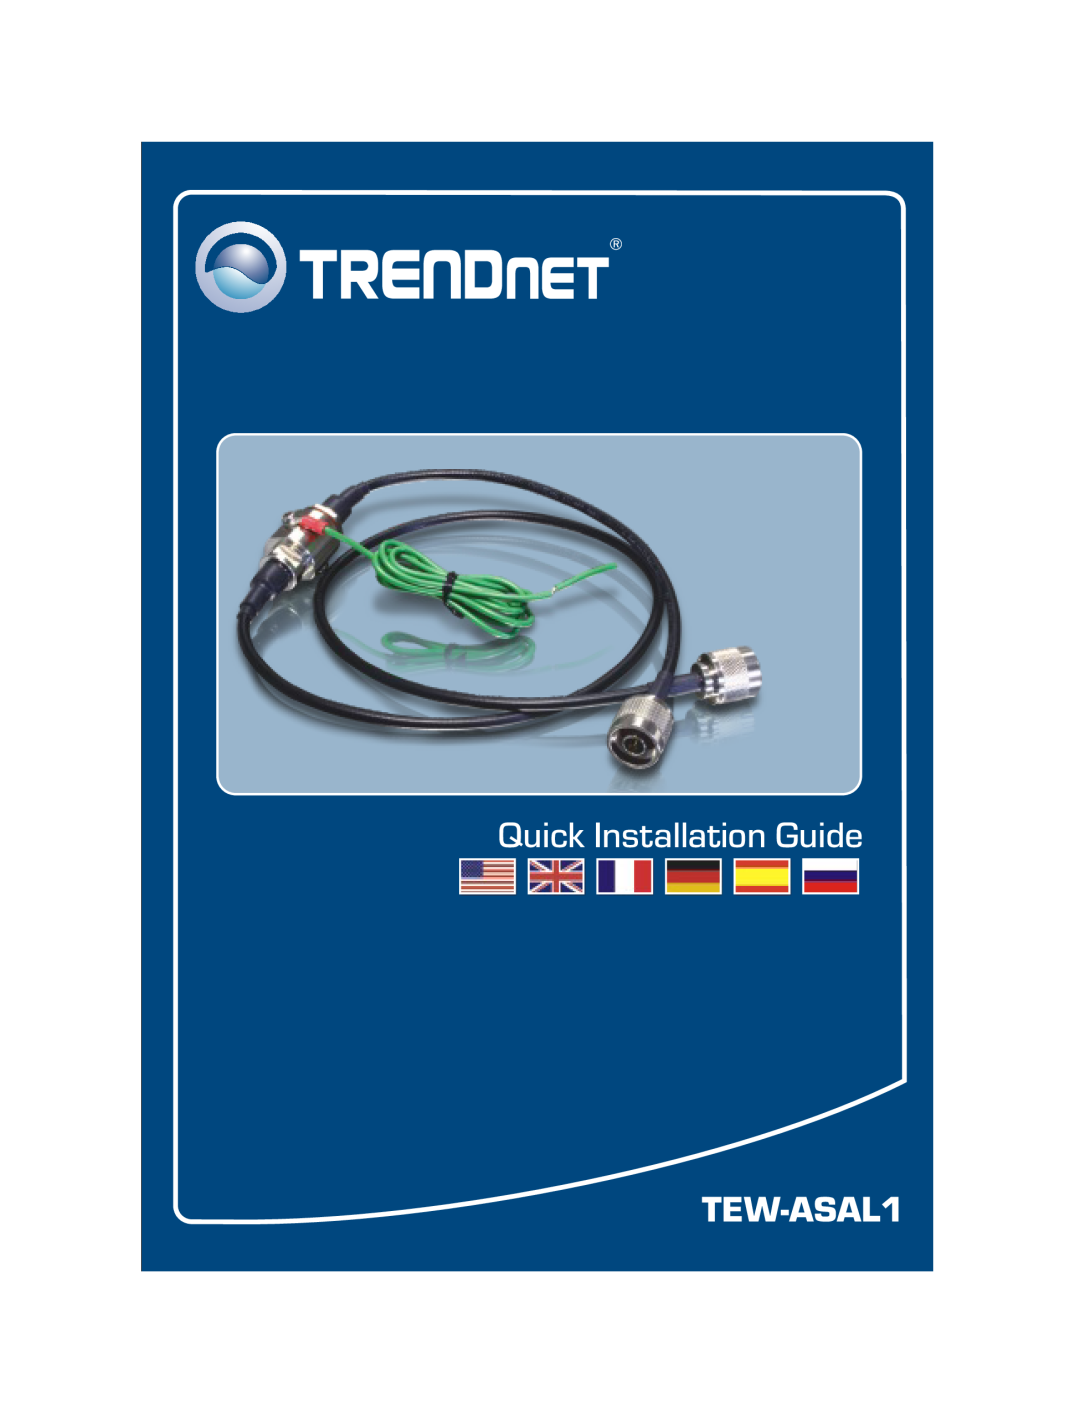 TRENDnet TEW-ASAL 1 manual Quick Installation Guide, TEW-ASAL1 